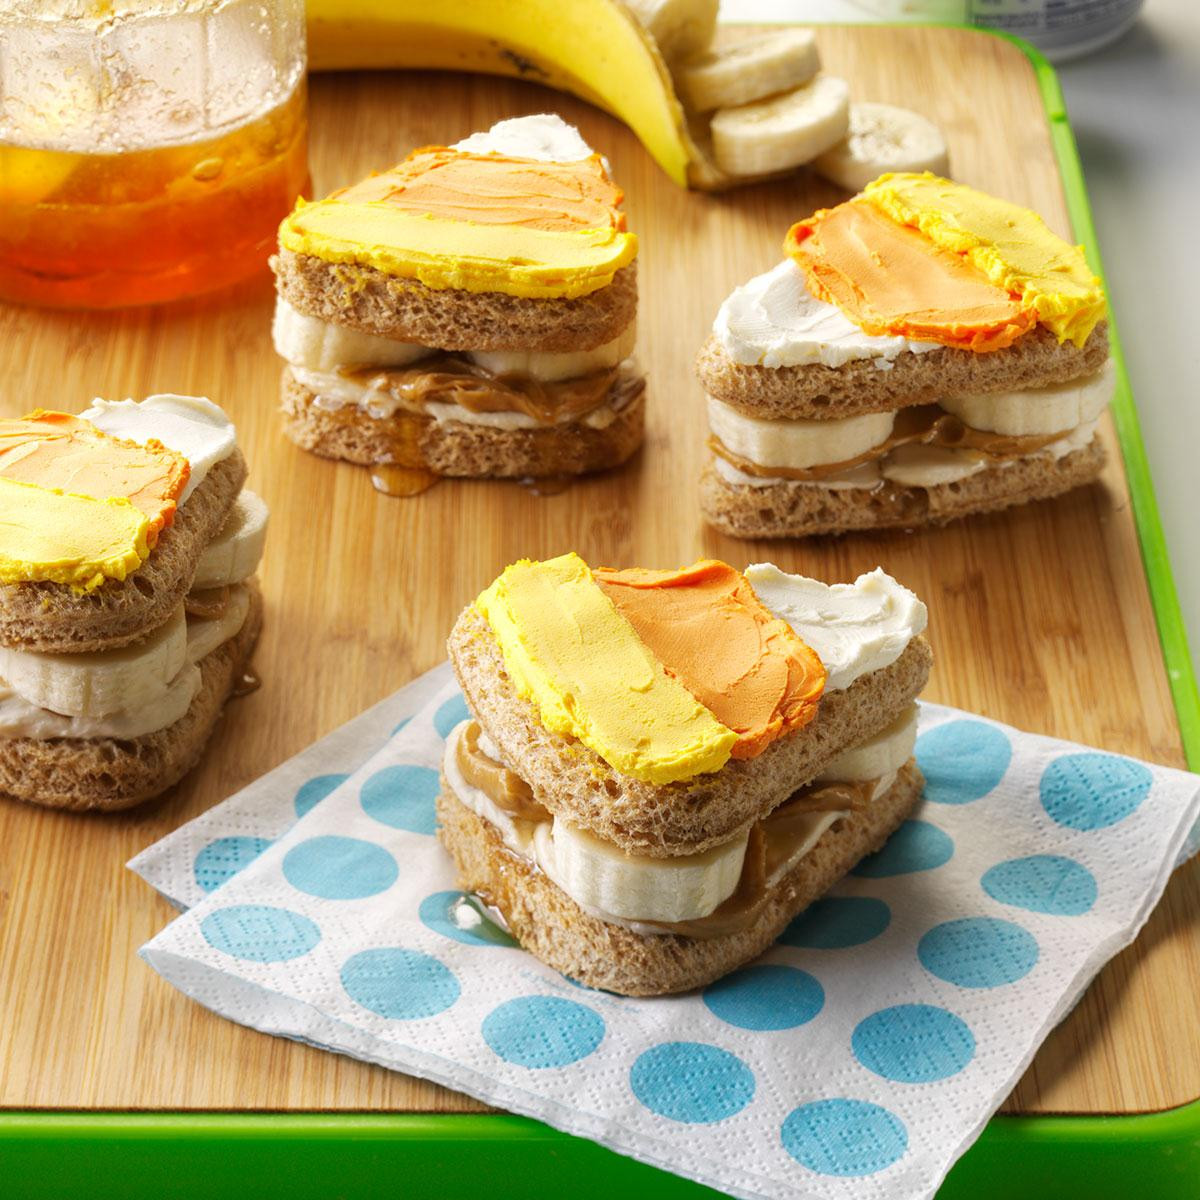 Cute Halloween Food Ideas For A Party
 Cute Halloween Sandwiches Recipe